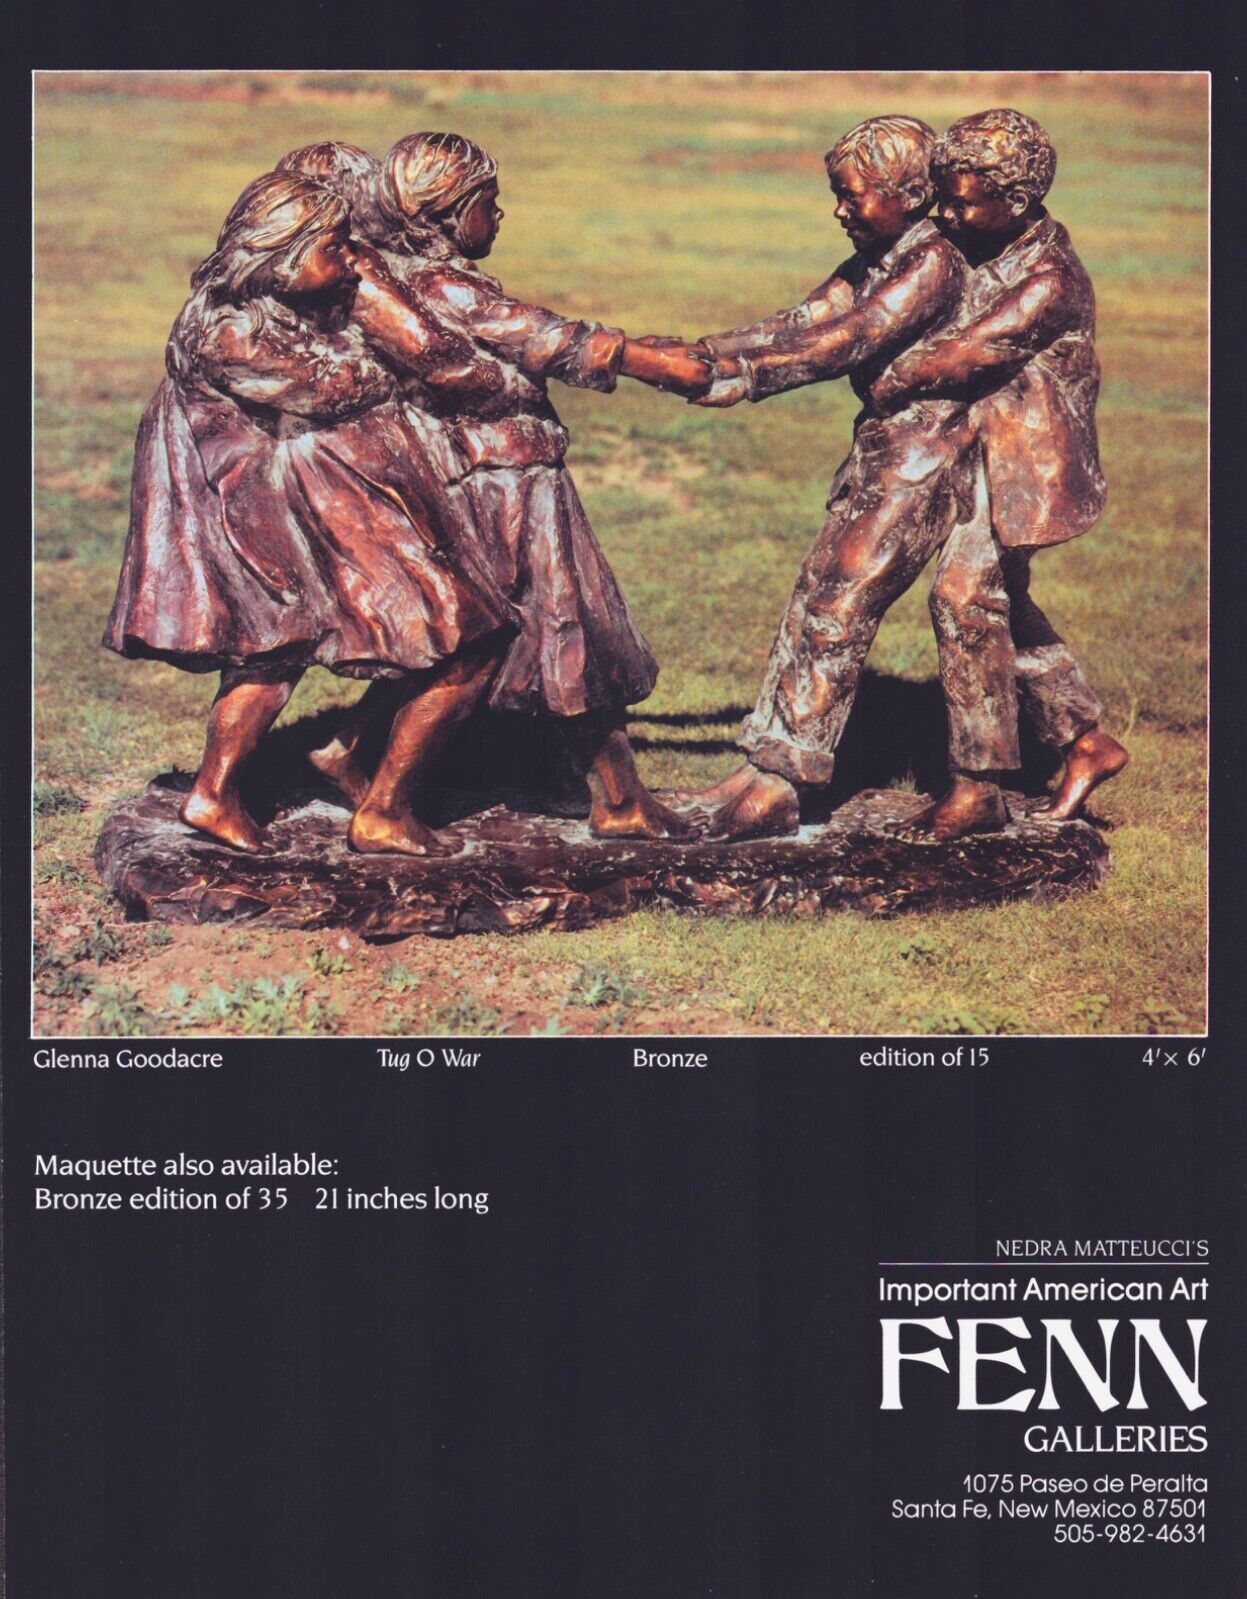 GLENNA GOODACRE Sculpture Art Gallery Exhibit ~ VINTAGE PRINT AD ~ 1988